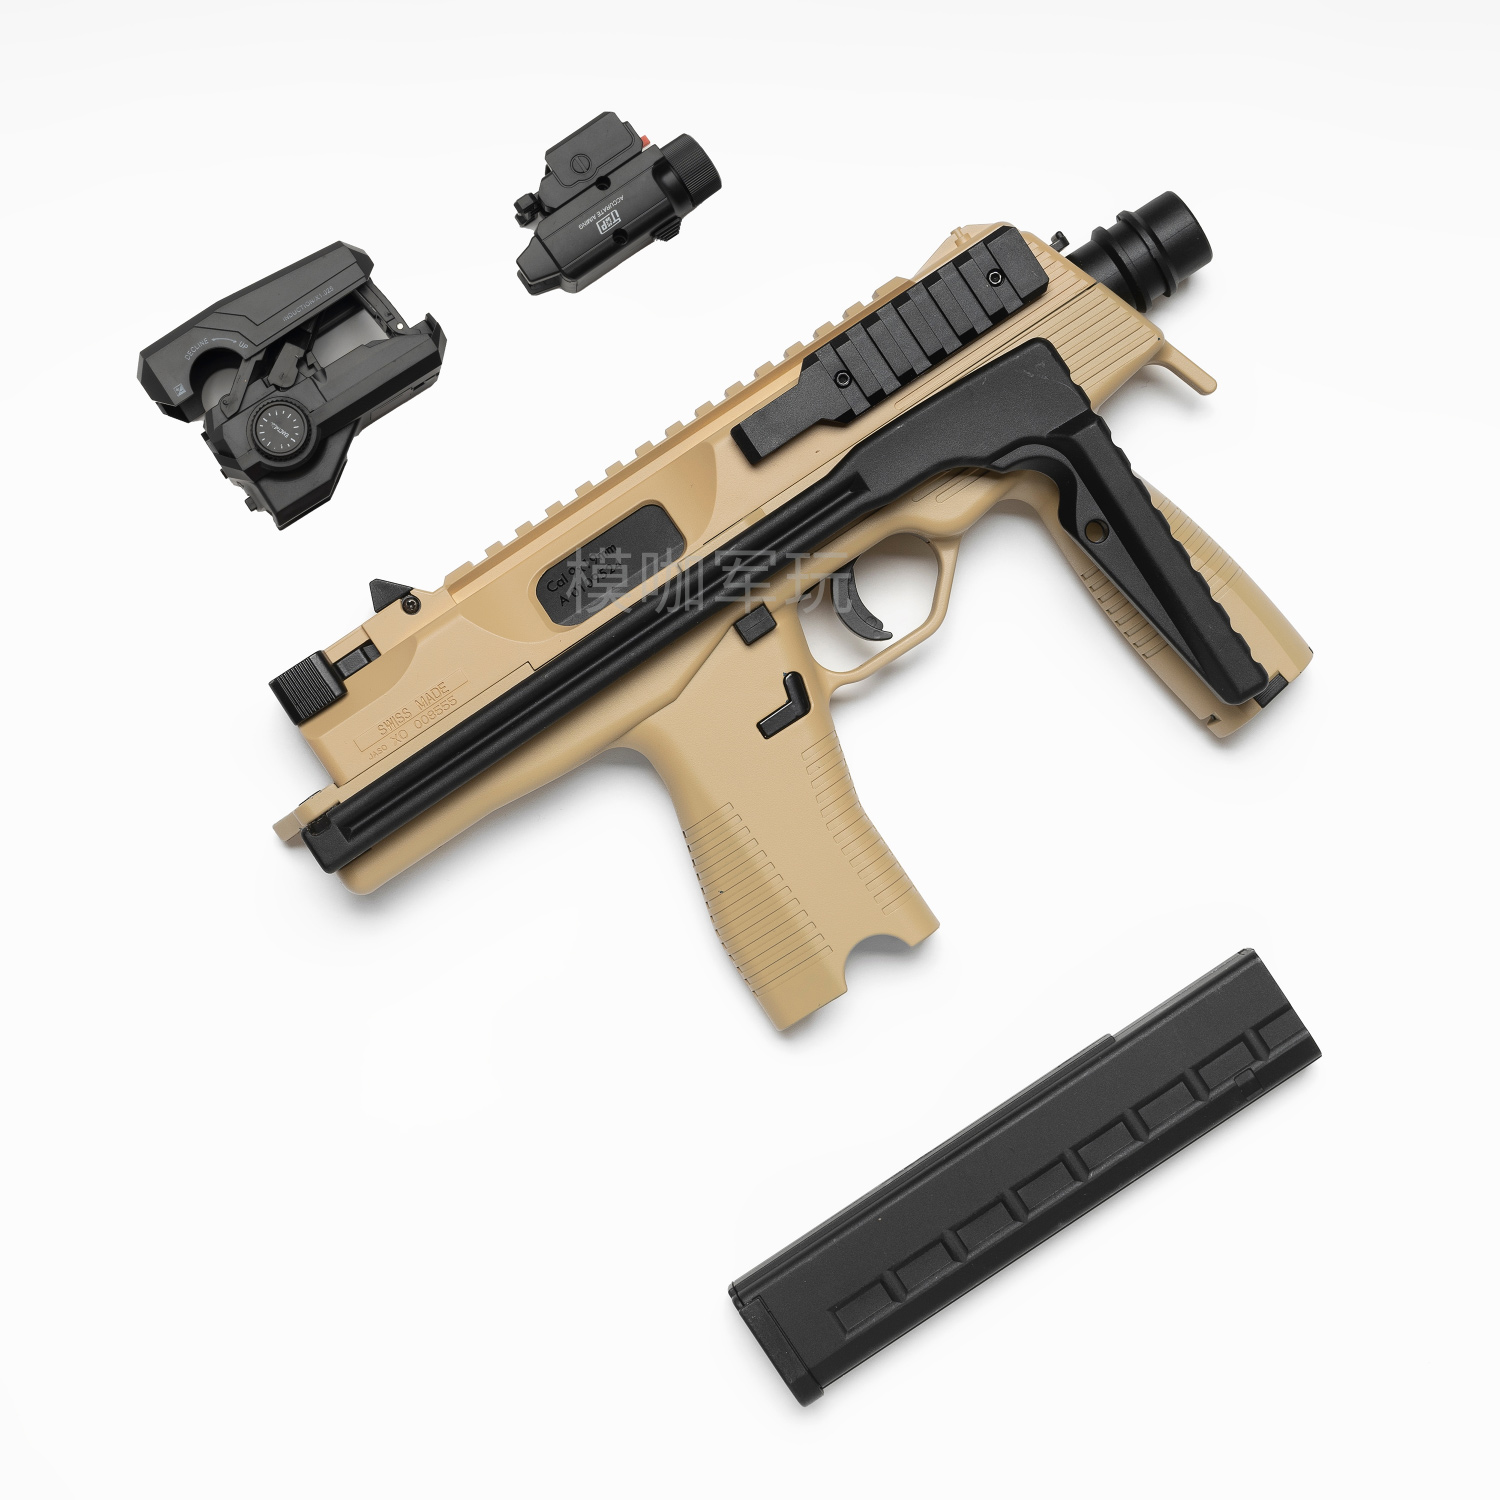 Lehui Toys MP9 Gel Ball Blaster, Thomet MP9 Realistic Toy Gun, Toy Guns That Look Real, Submachine Gun Nerf Gun For Adults